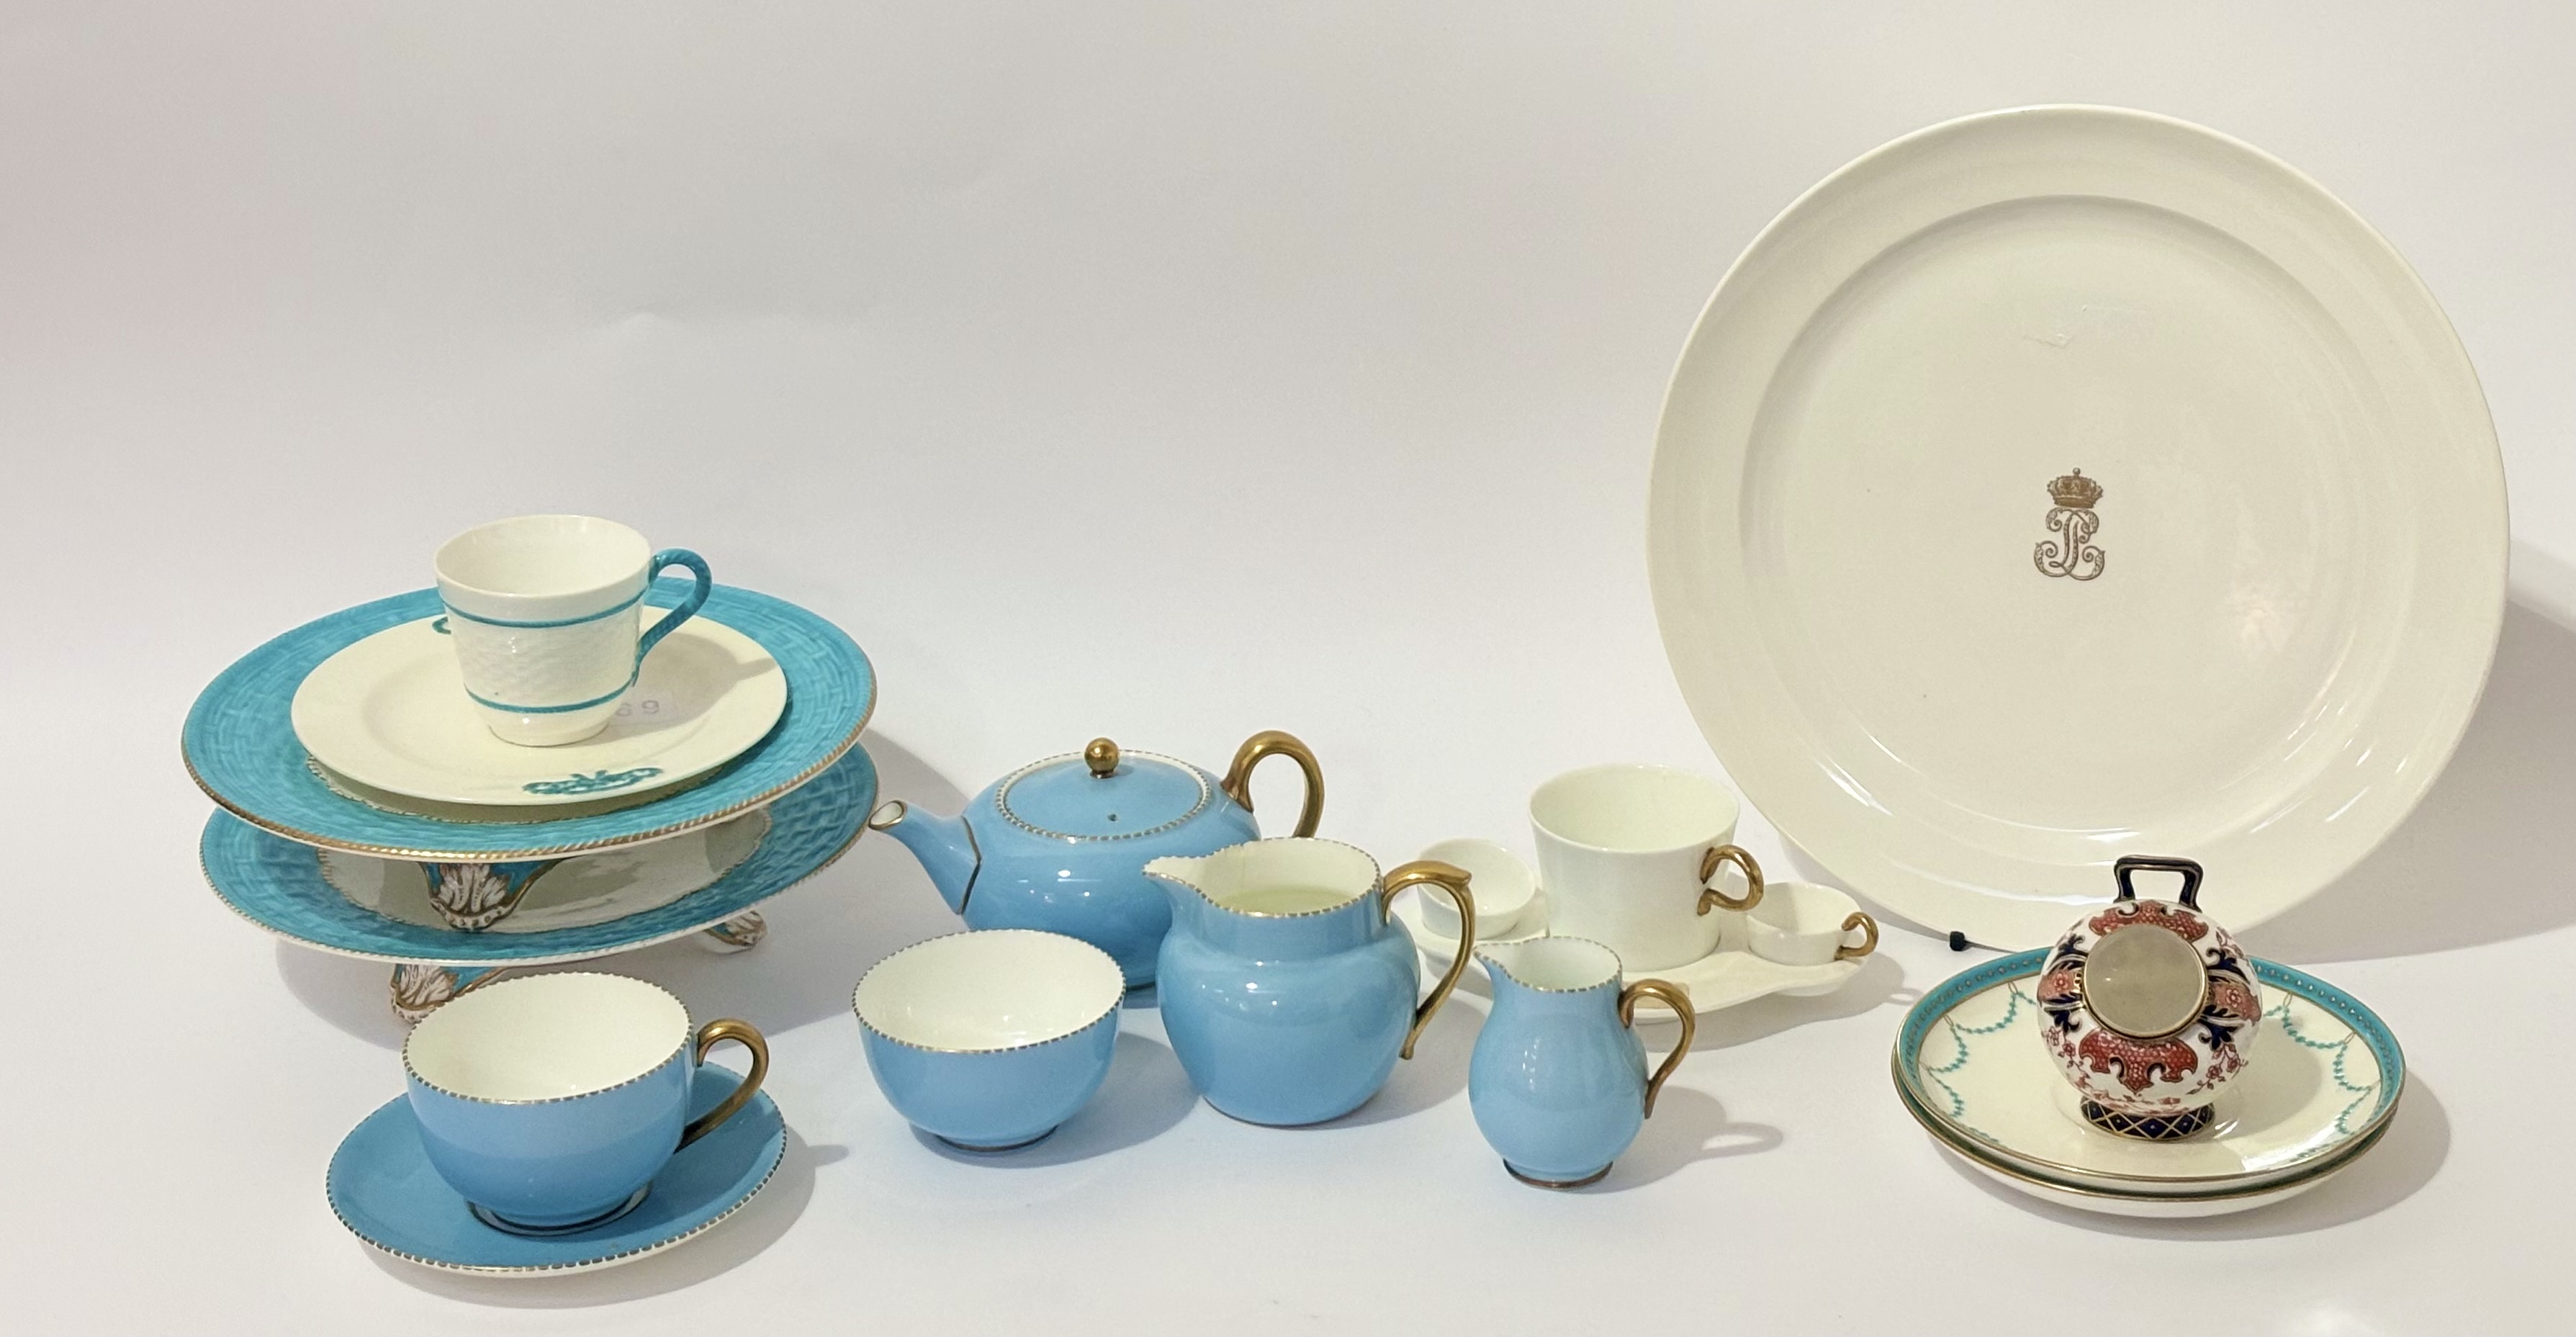 A mixed group comprising, a Wedgwood April blue part tea service comprising tea cup and saucer, milk